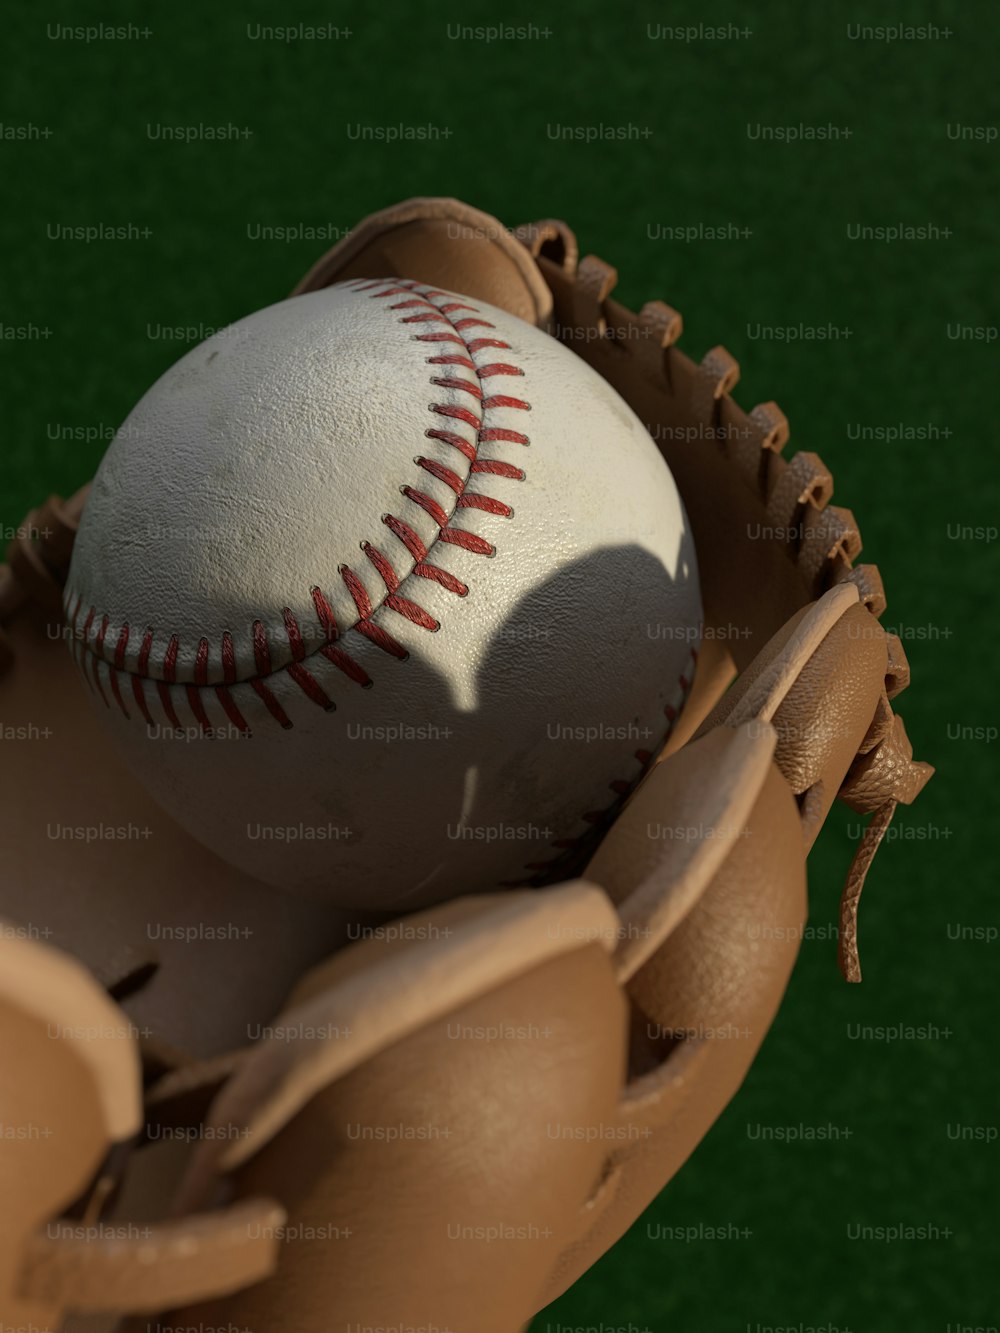 a baseball in a glove on a green field